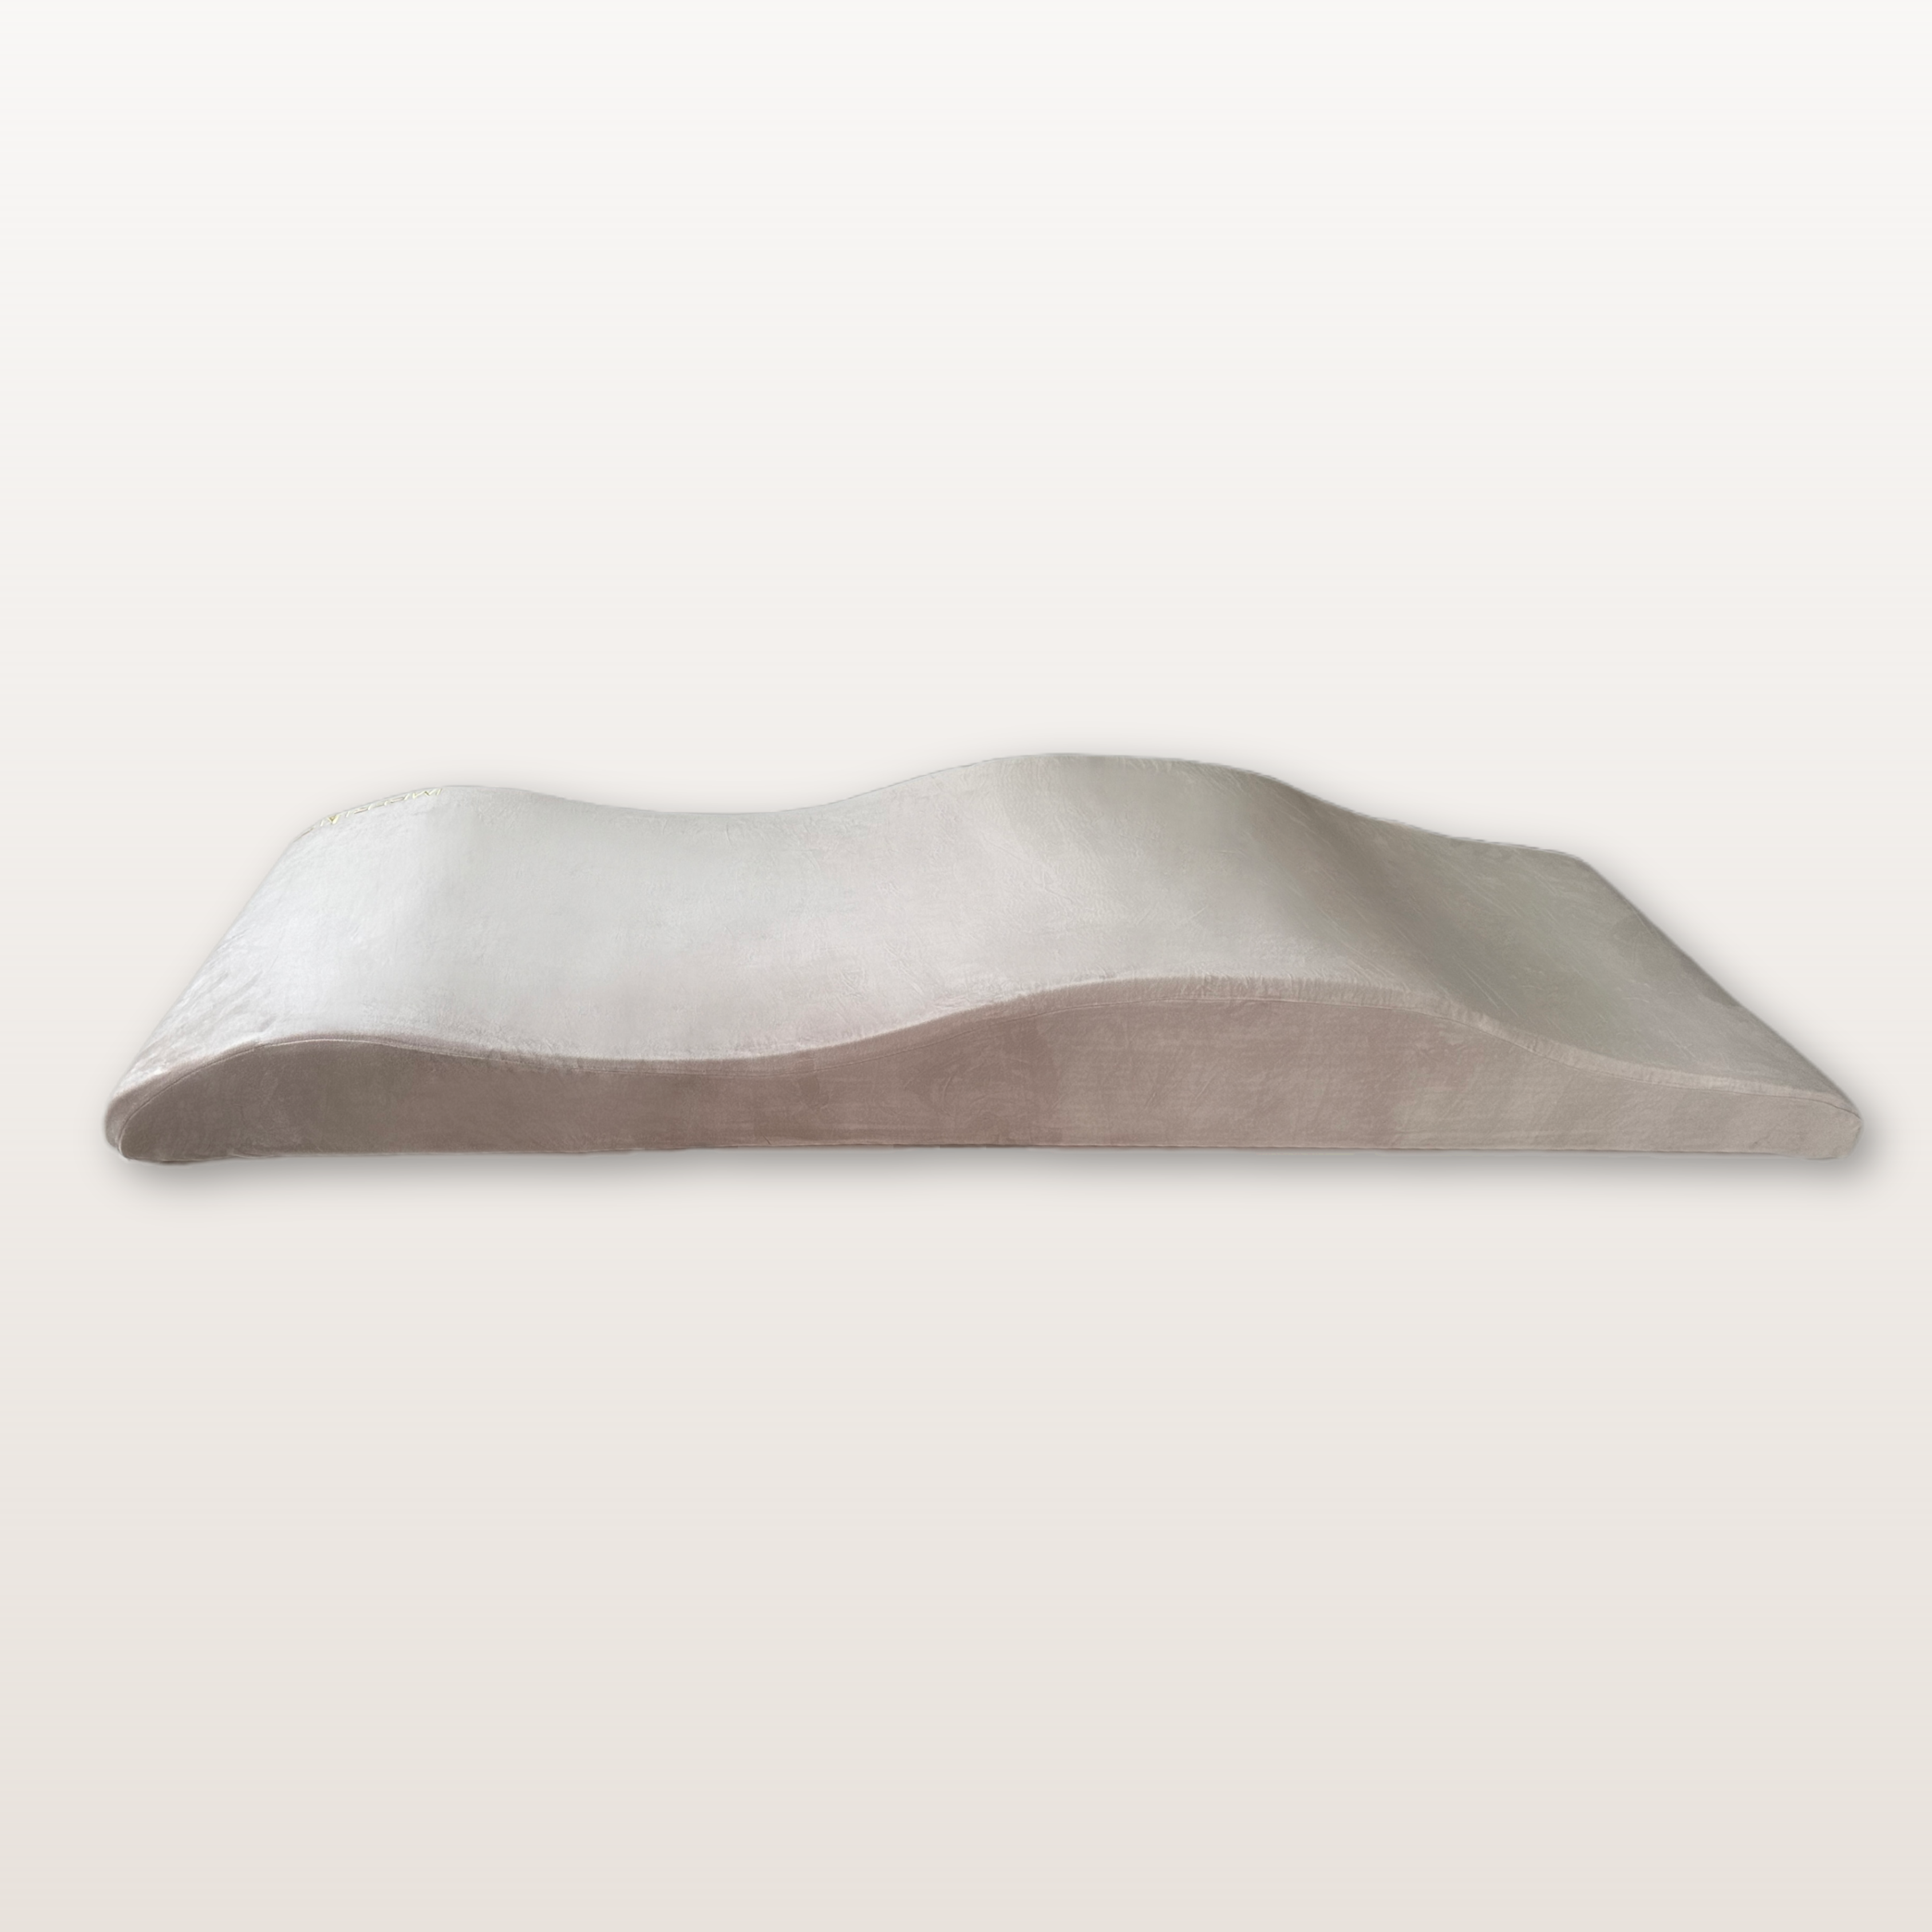 materasso lettino estetica mattress eyelash anatomical